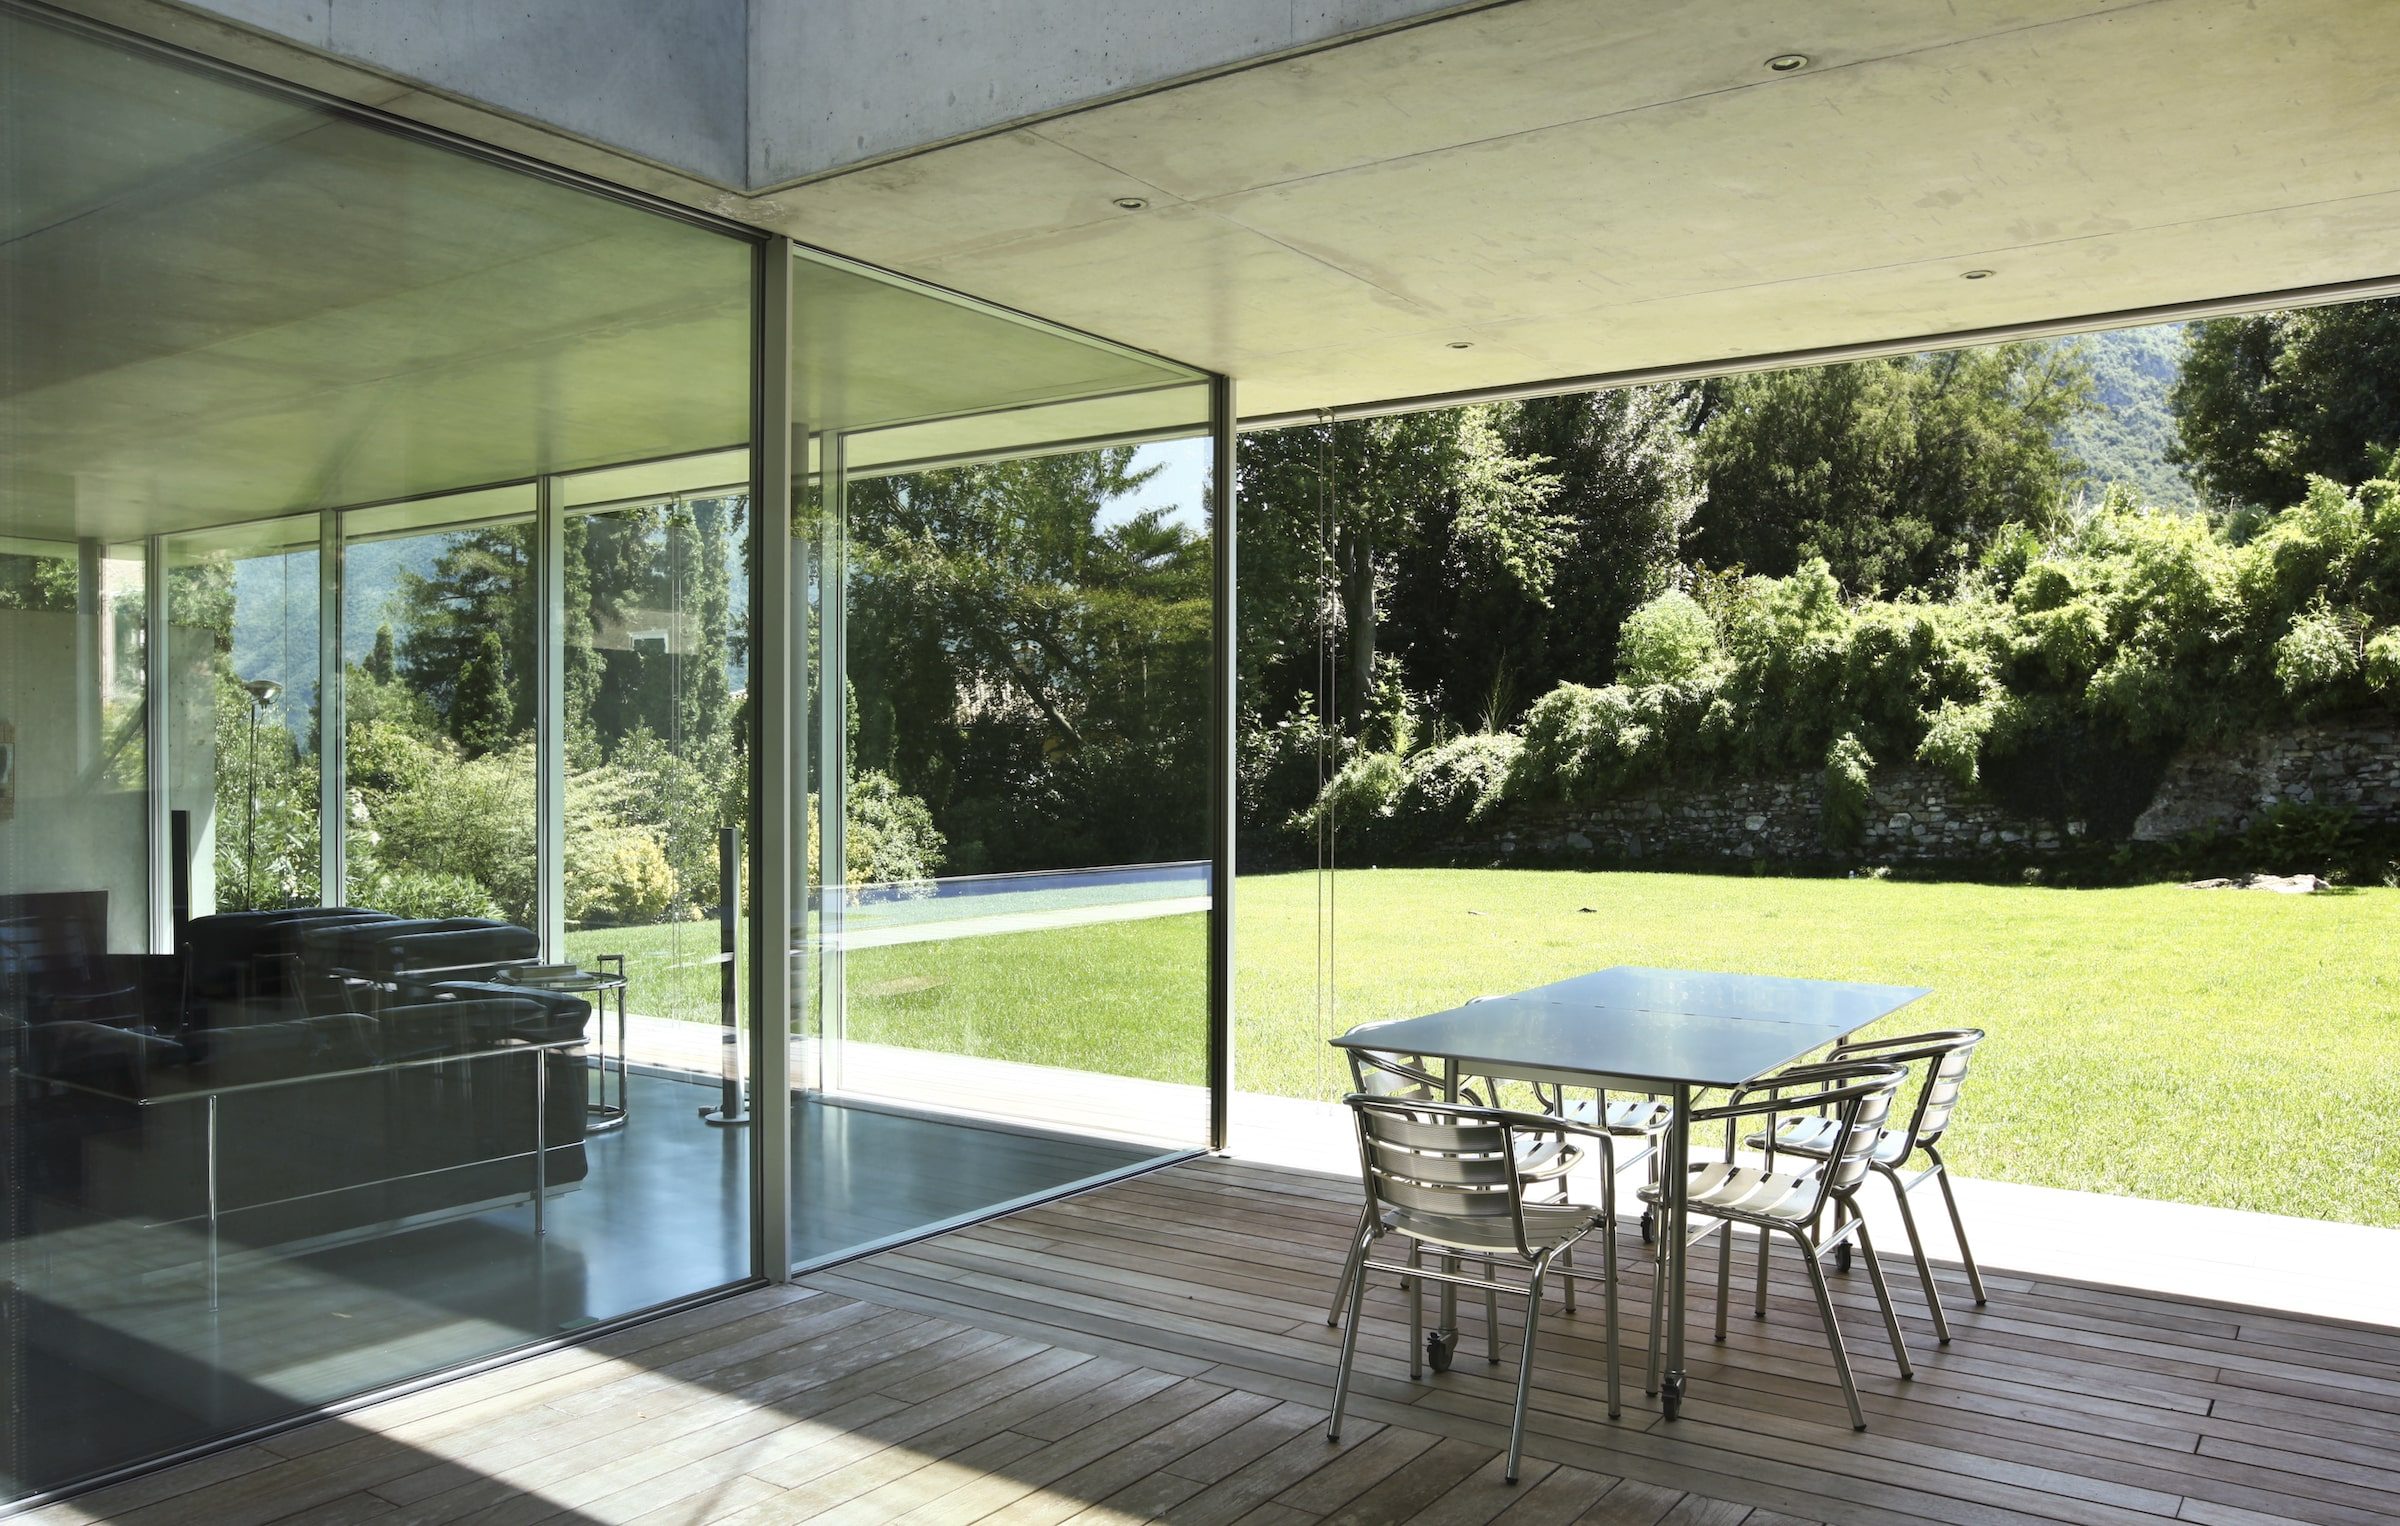 alunet ESS47 aluminium sliding doors in a modern house terrace area